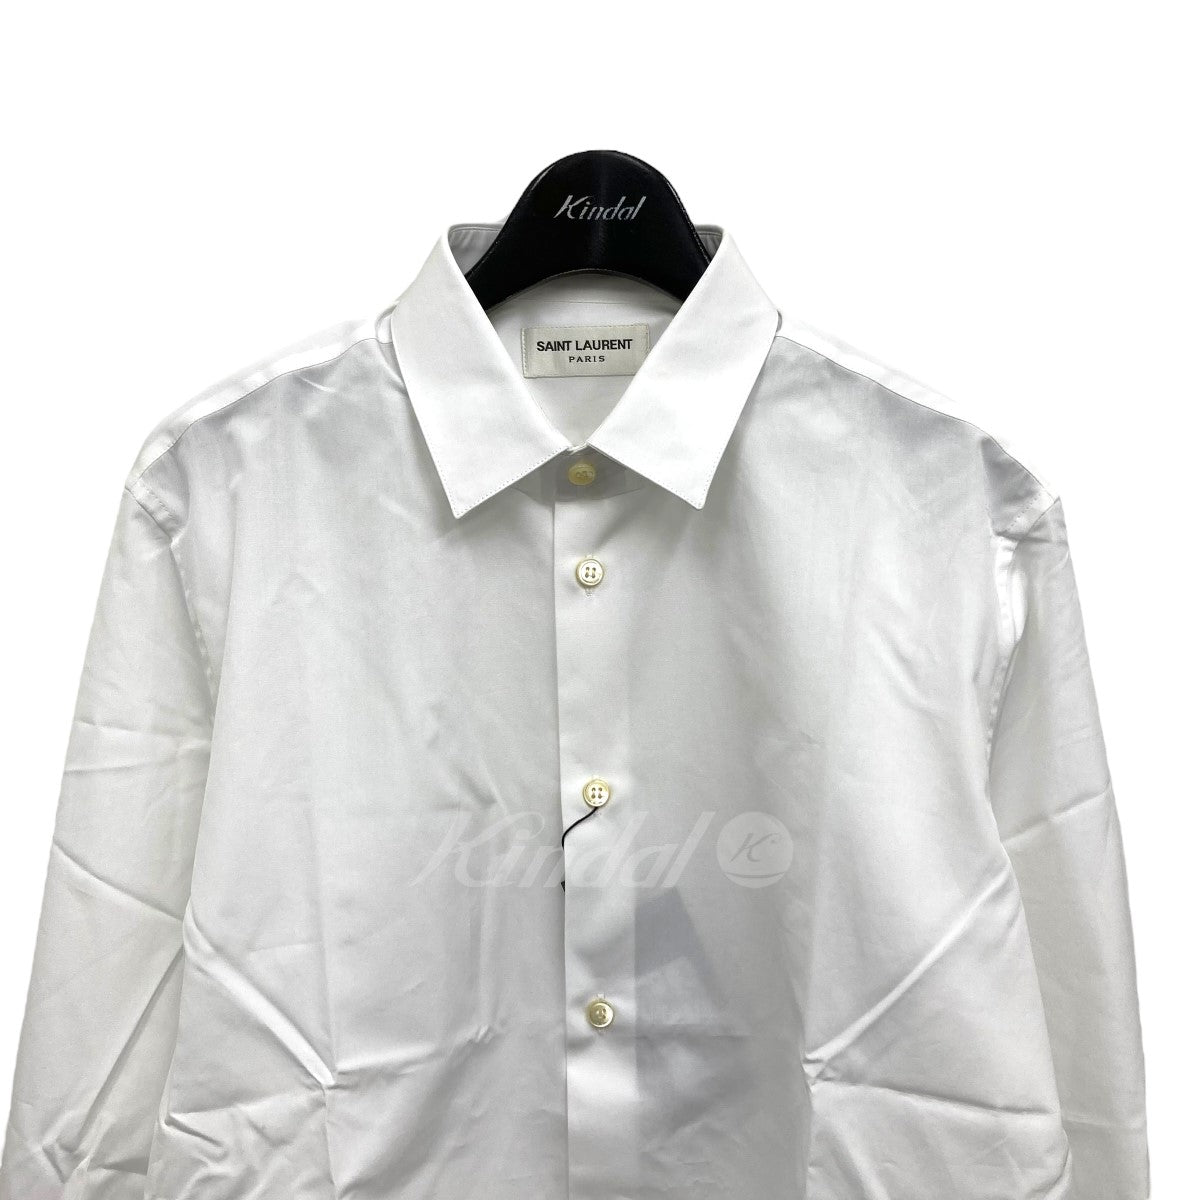 SAINT LAURENT PARIS(サンローランパリ) ドレスシャツ 536096 ホワイト 